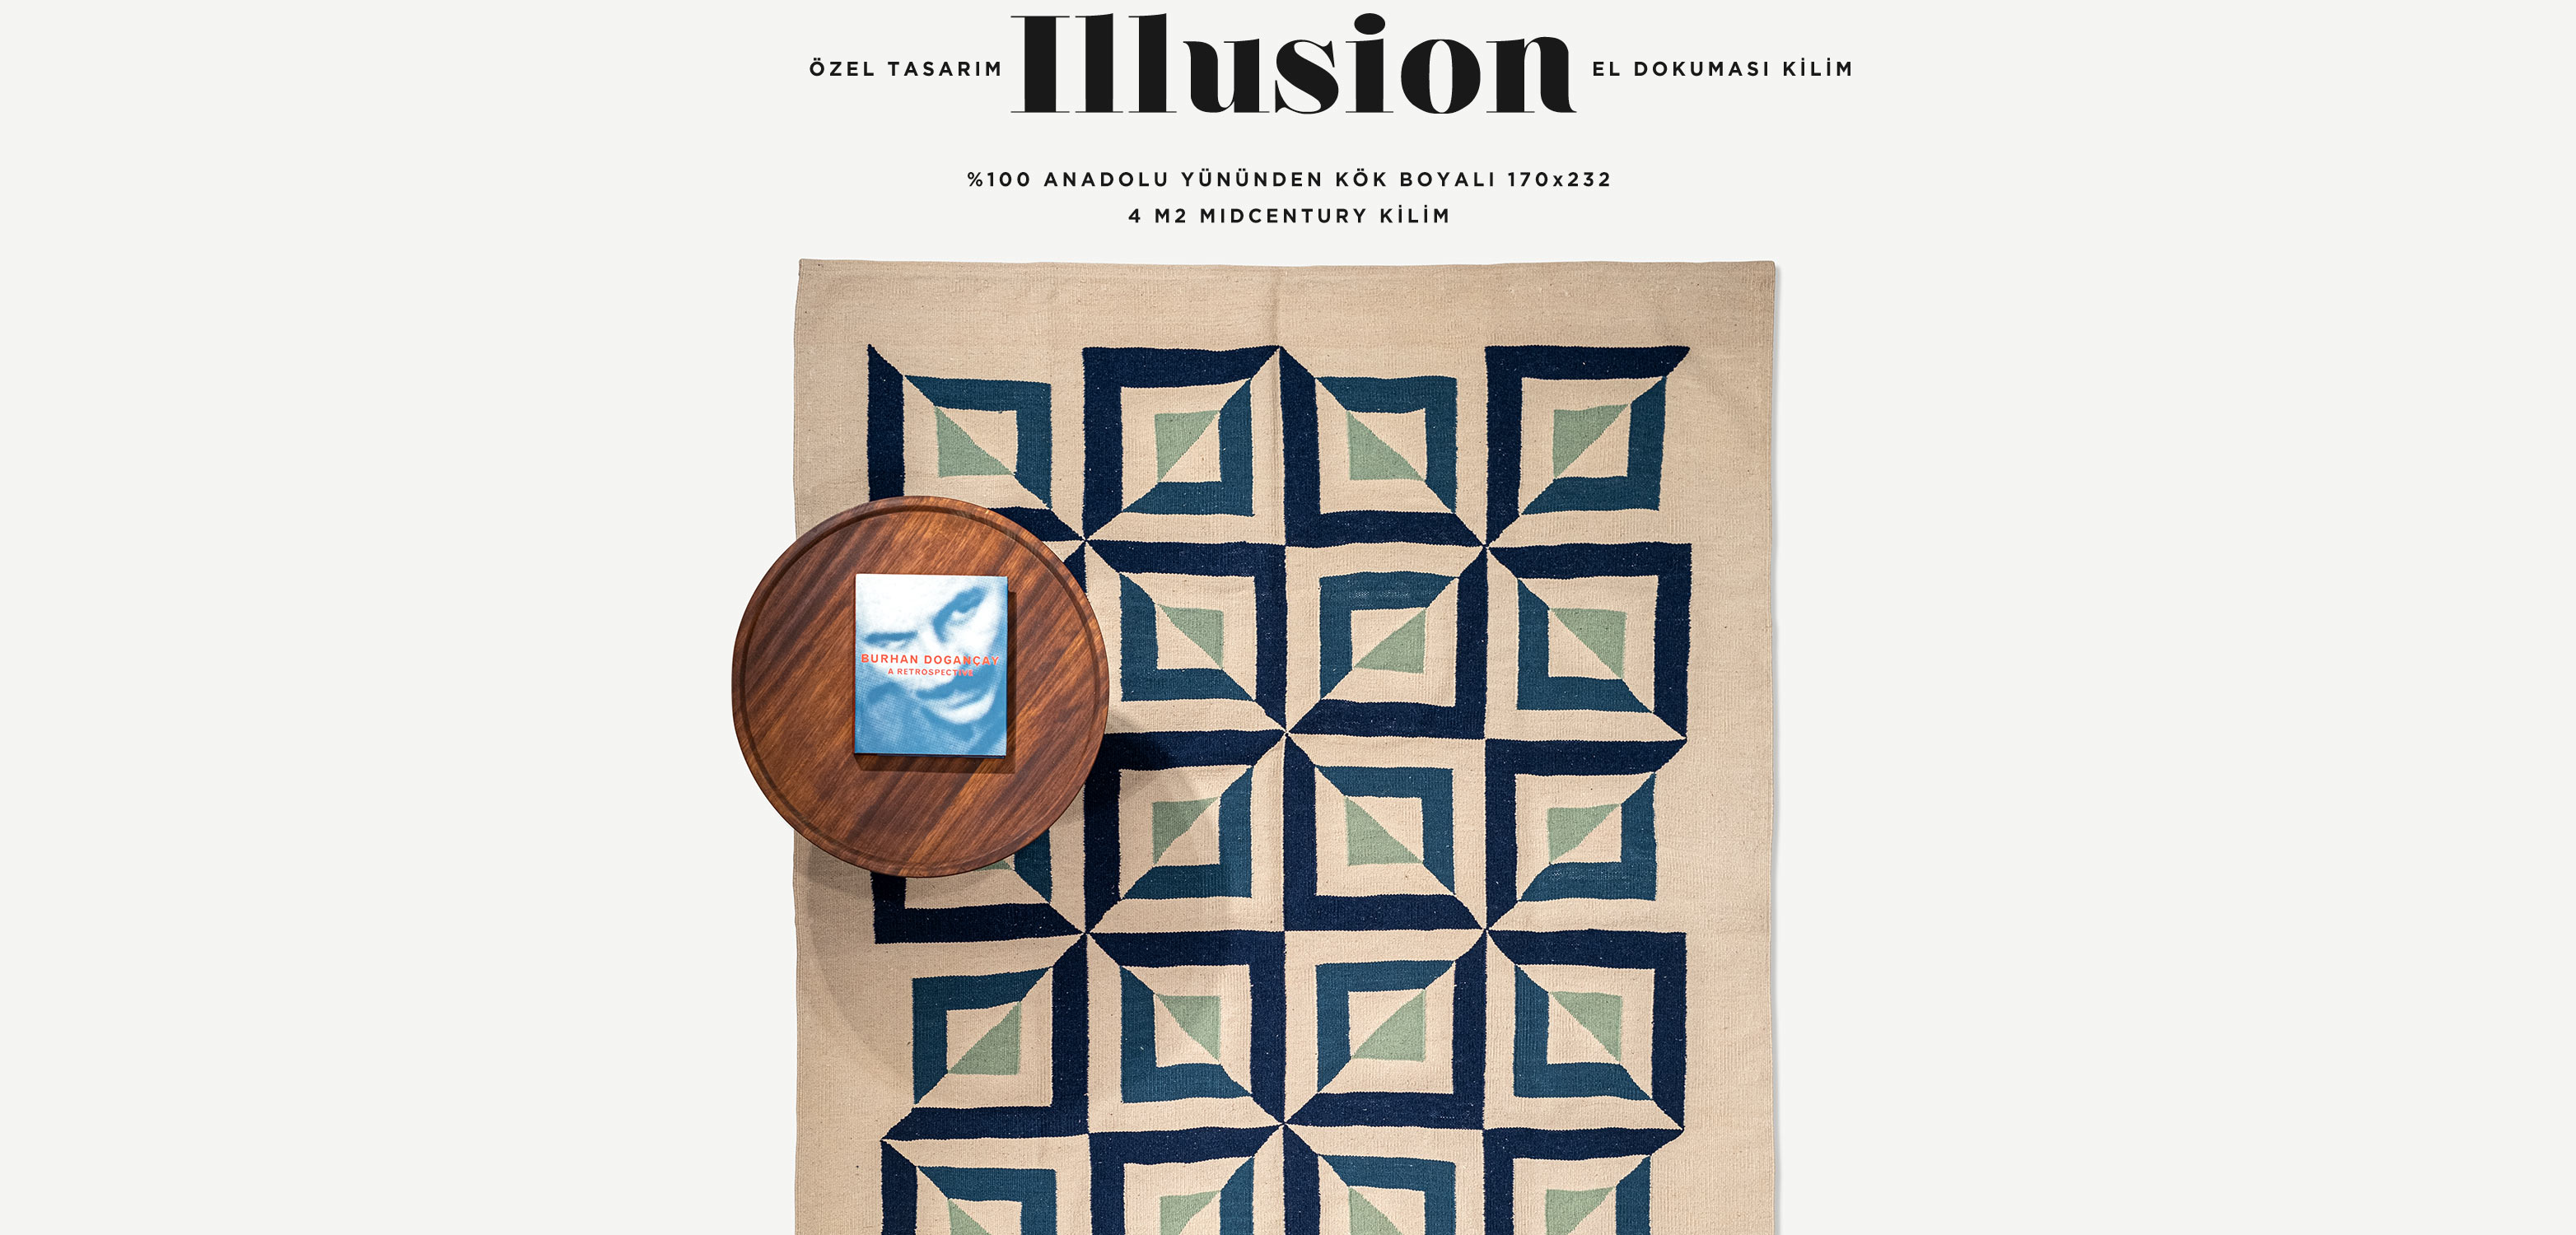 Illusion El Dokuması Kilim 170x232, 4 m2'in resmi